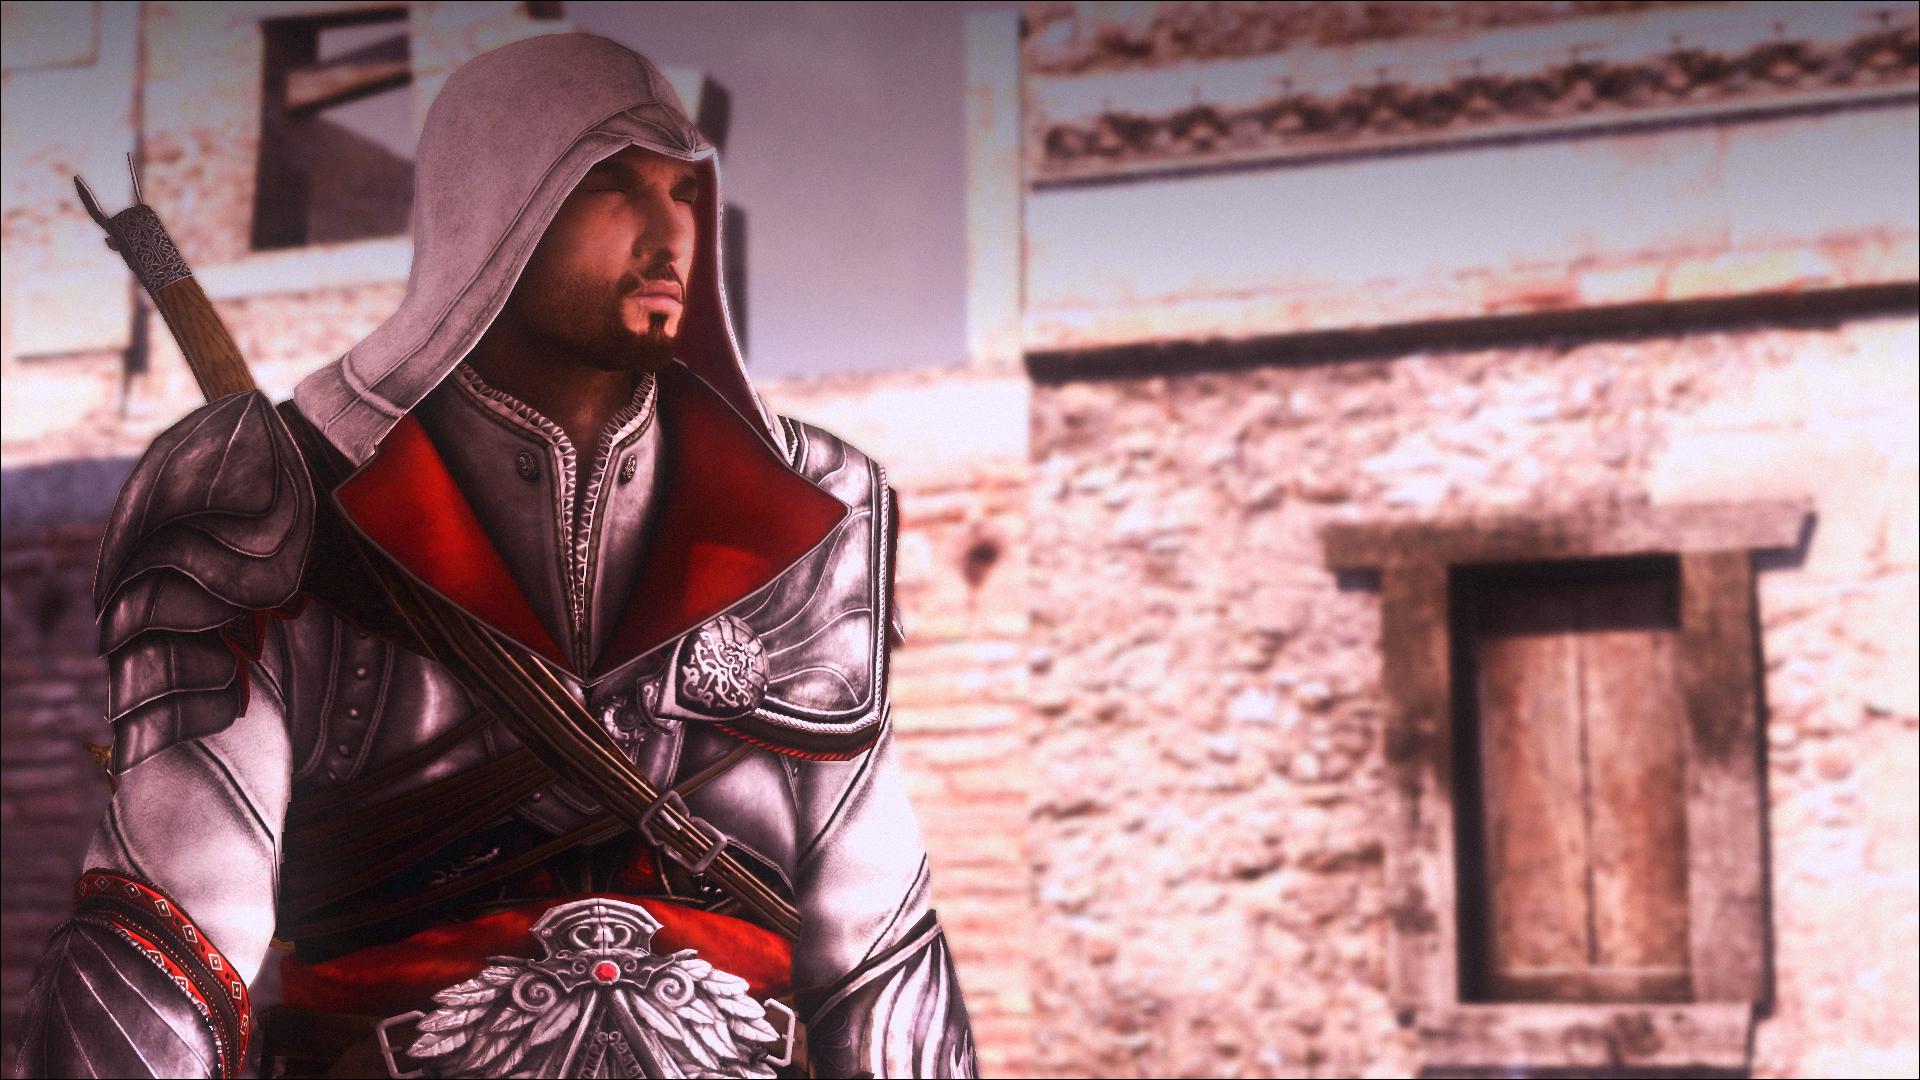 Brotherhood ii. Assassin's Creed 2 Brotherhood. Assassins Creed 2 Brotherhood ассасины. Ассасин Крид 2 братство Скриншоты. Эцио в Риме.